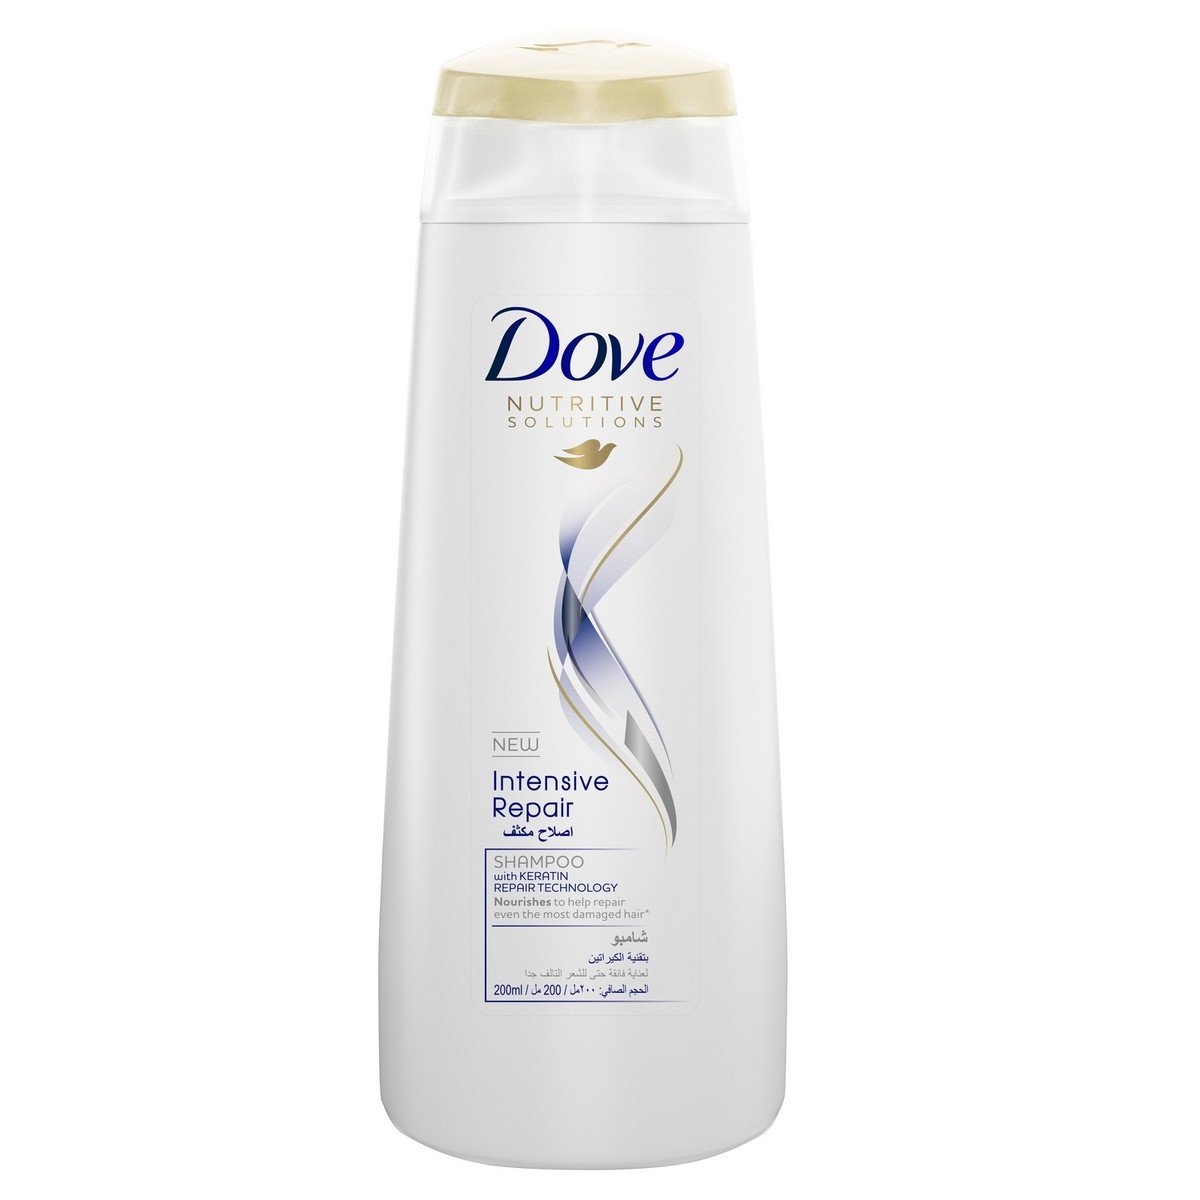 Dove Nutritive Solutions Intense Repair Shampoo, 200 ml